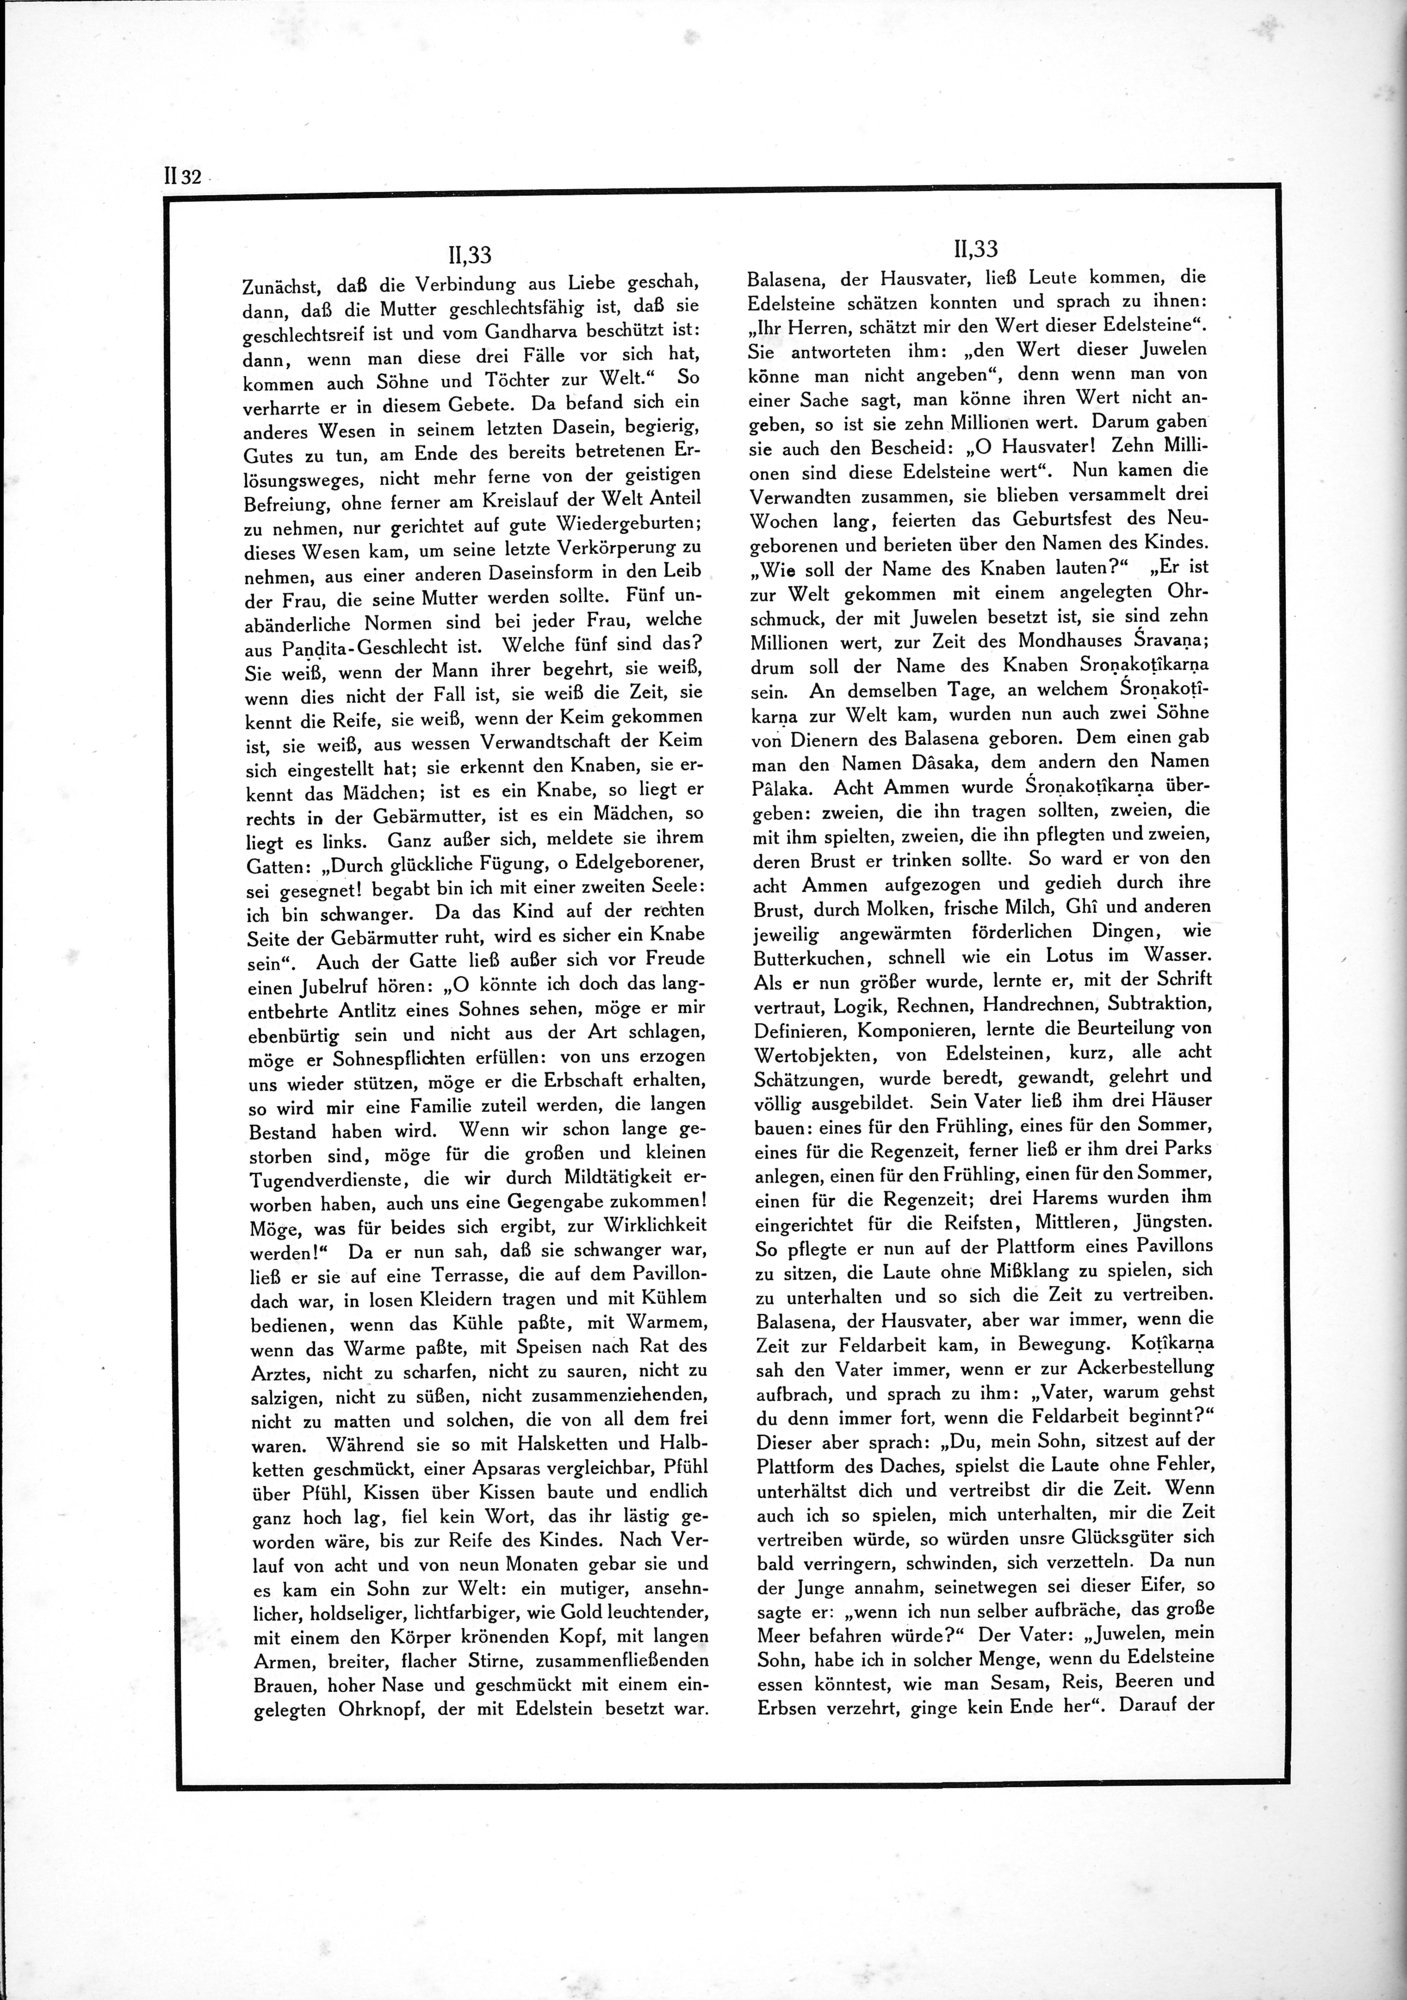 Alt-Kutscha : vol.1 / Page 138 (Grayscale High Resolution Image)